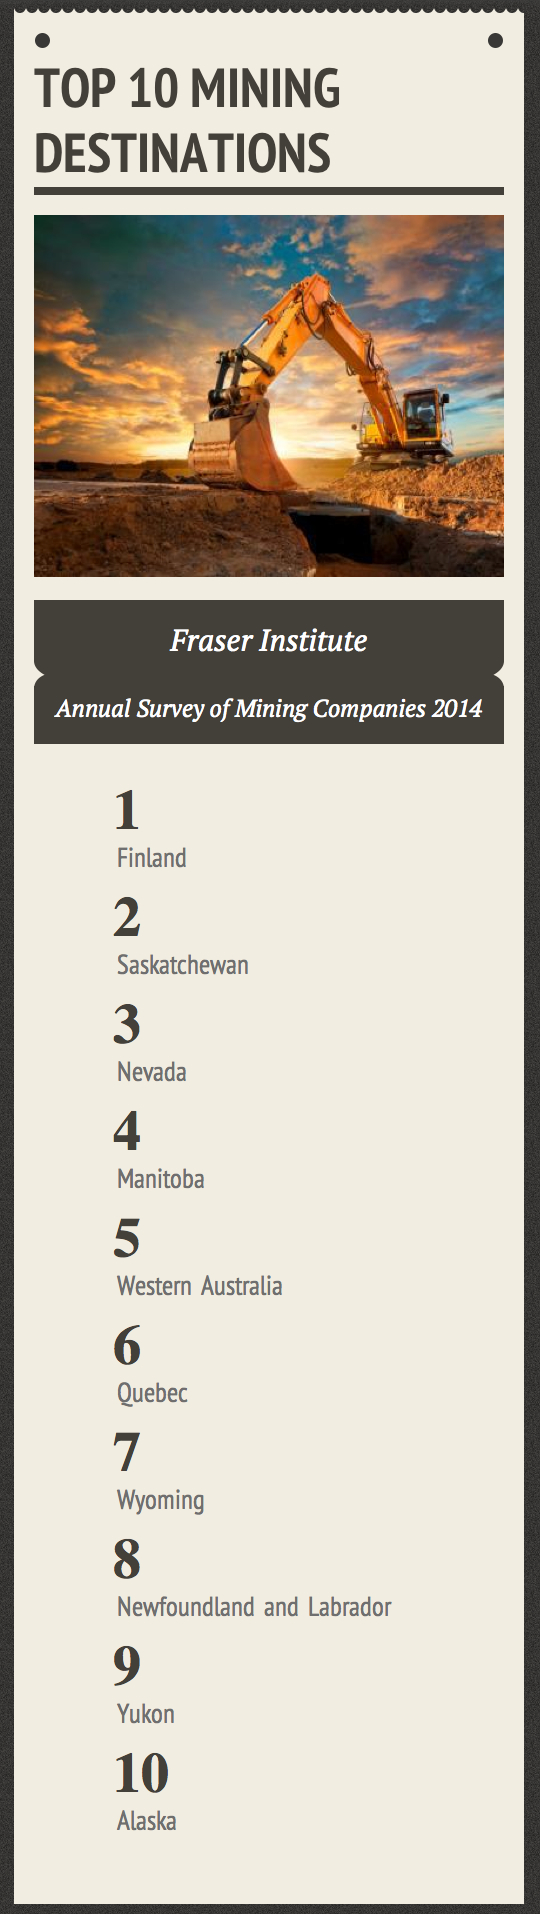 Canada’s Saskatchewan second only to Finland as world’s top mining destination